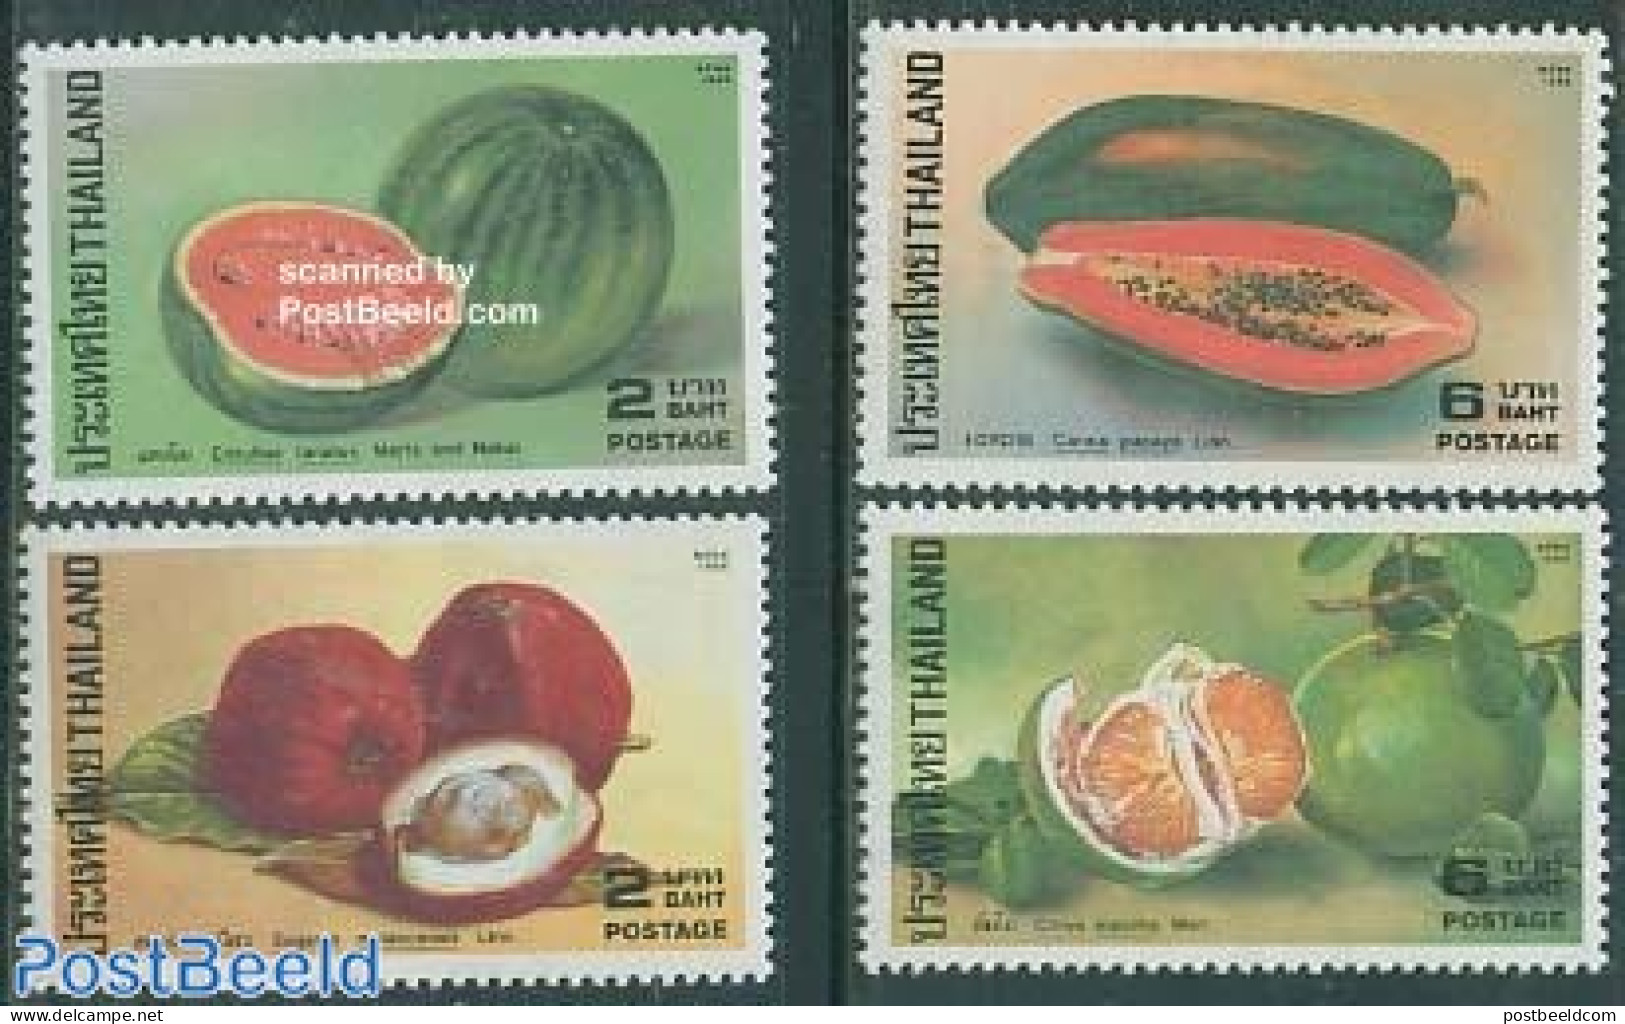 Thailand 1986 Fruits 4v, Mint NH, Nature - Fruit - Fruits